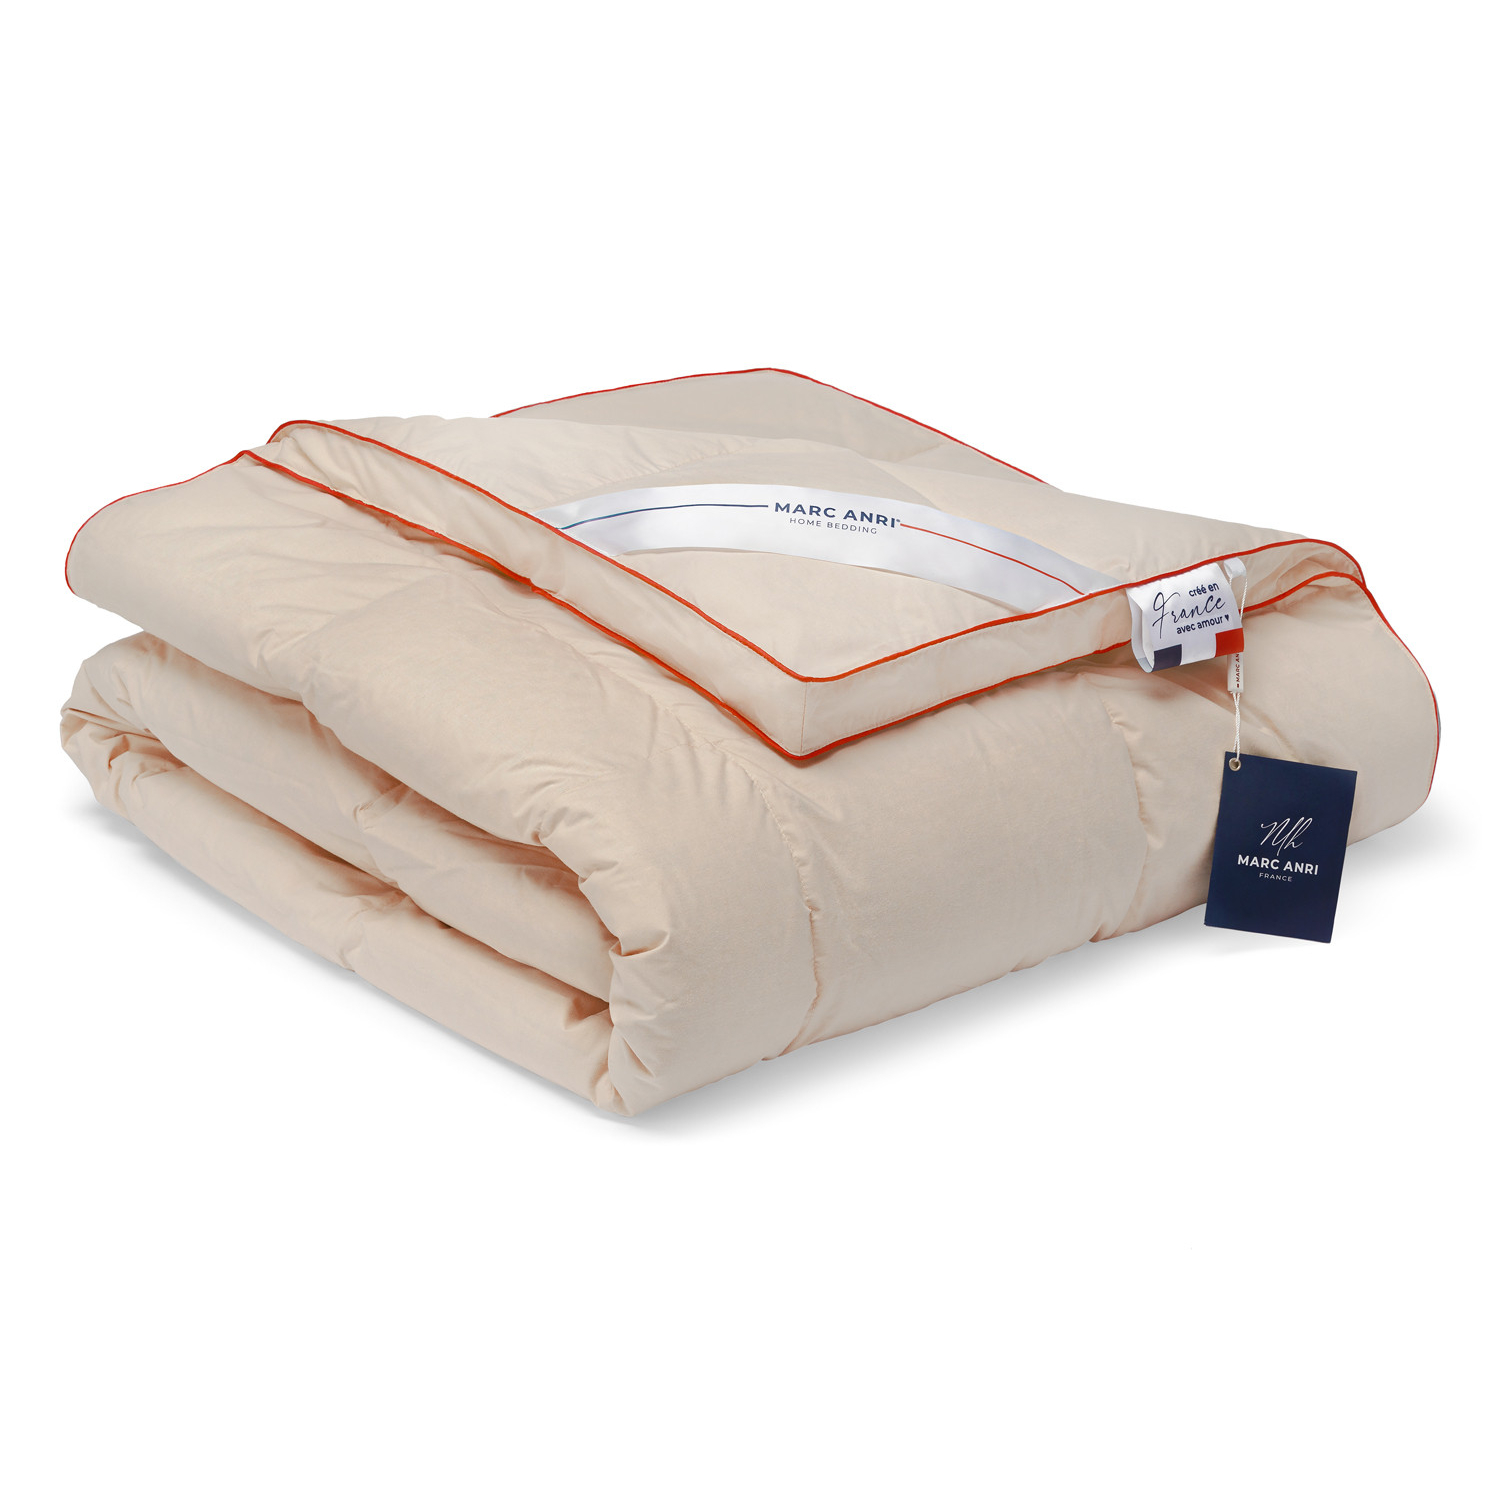 Пуховое одеяло Marc Anri Cannes бежевое 200х220 см (МН2066) одеяло marc anri rouffach белое 200х220 см ma ec